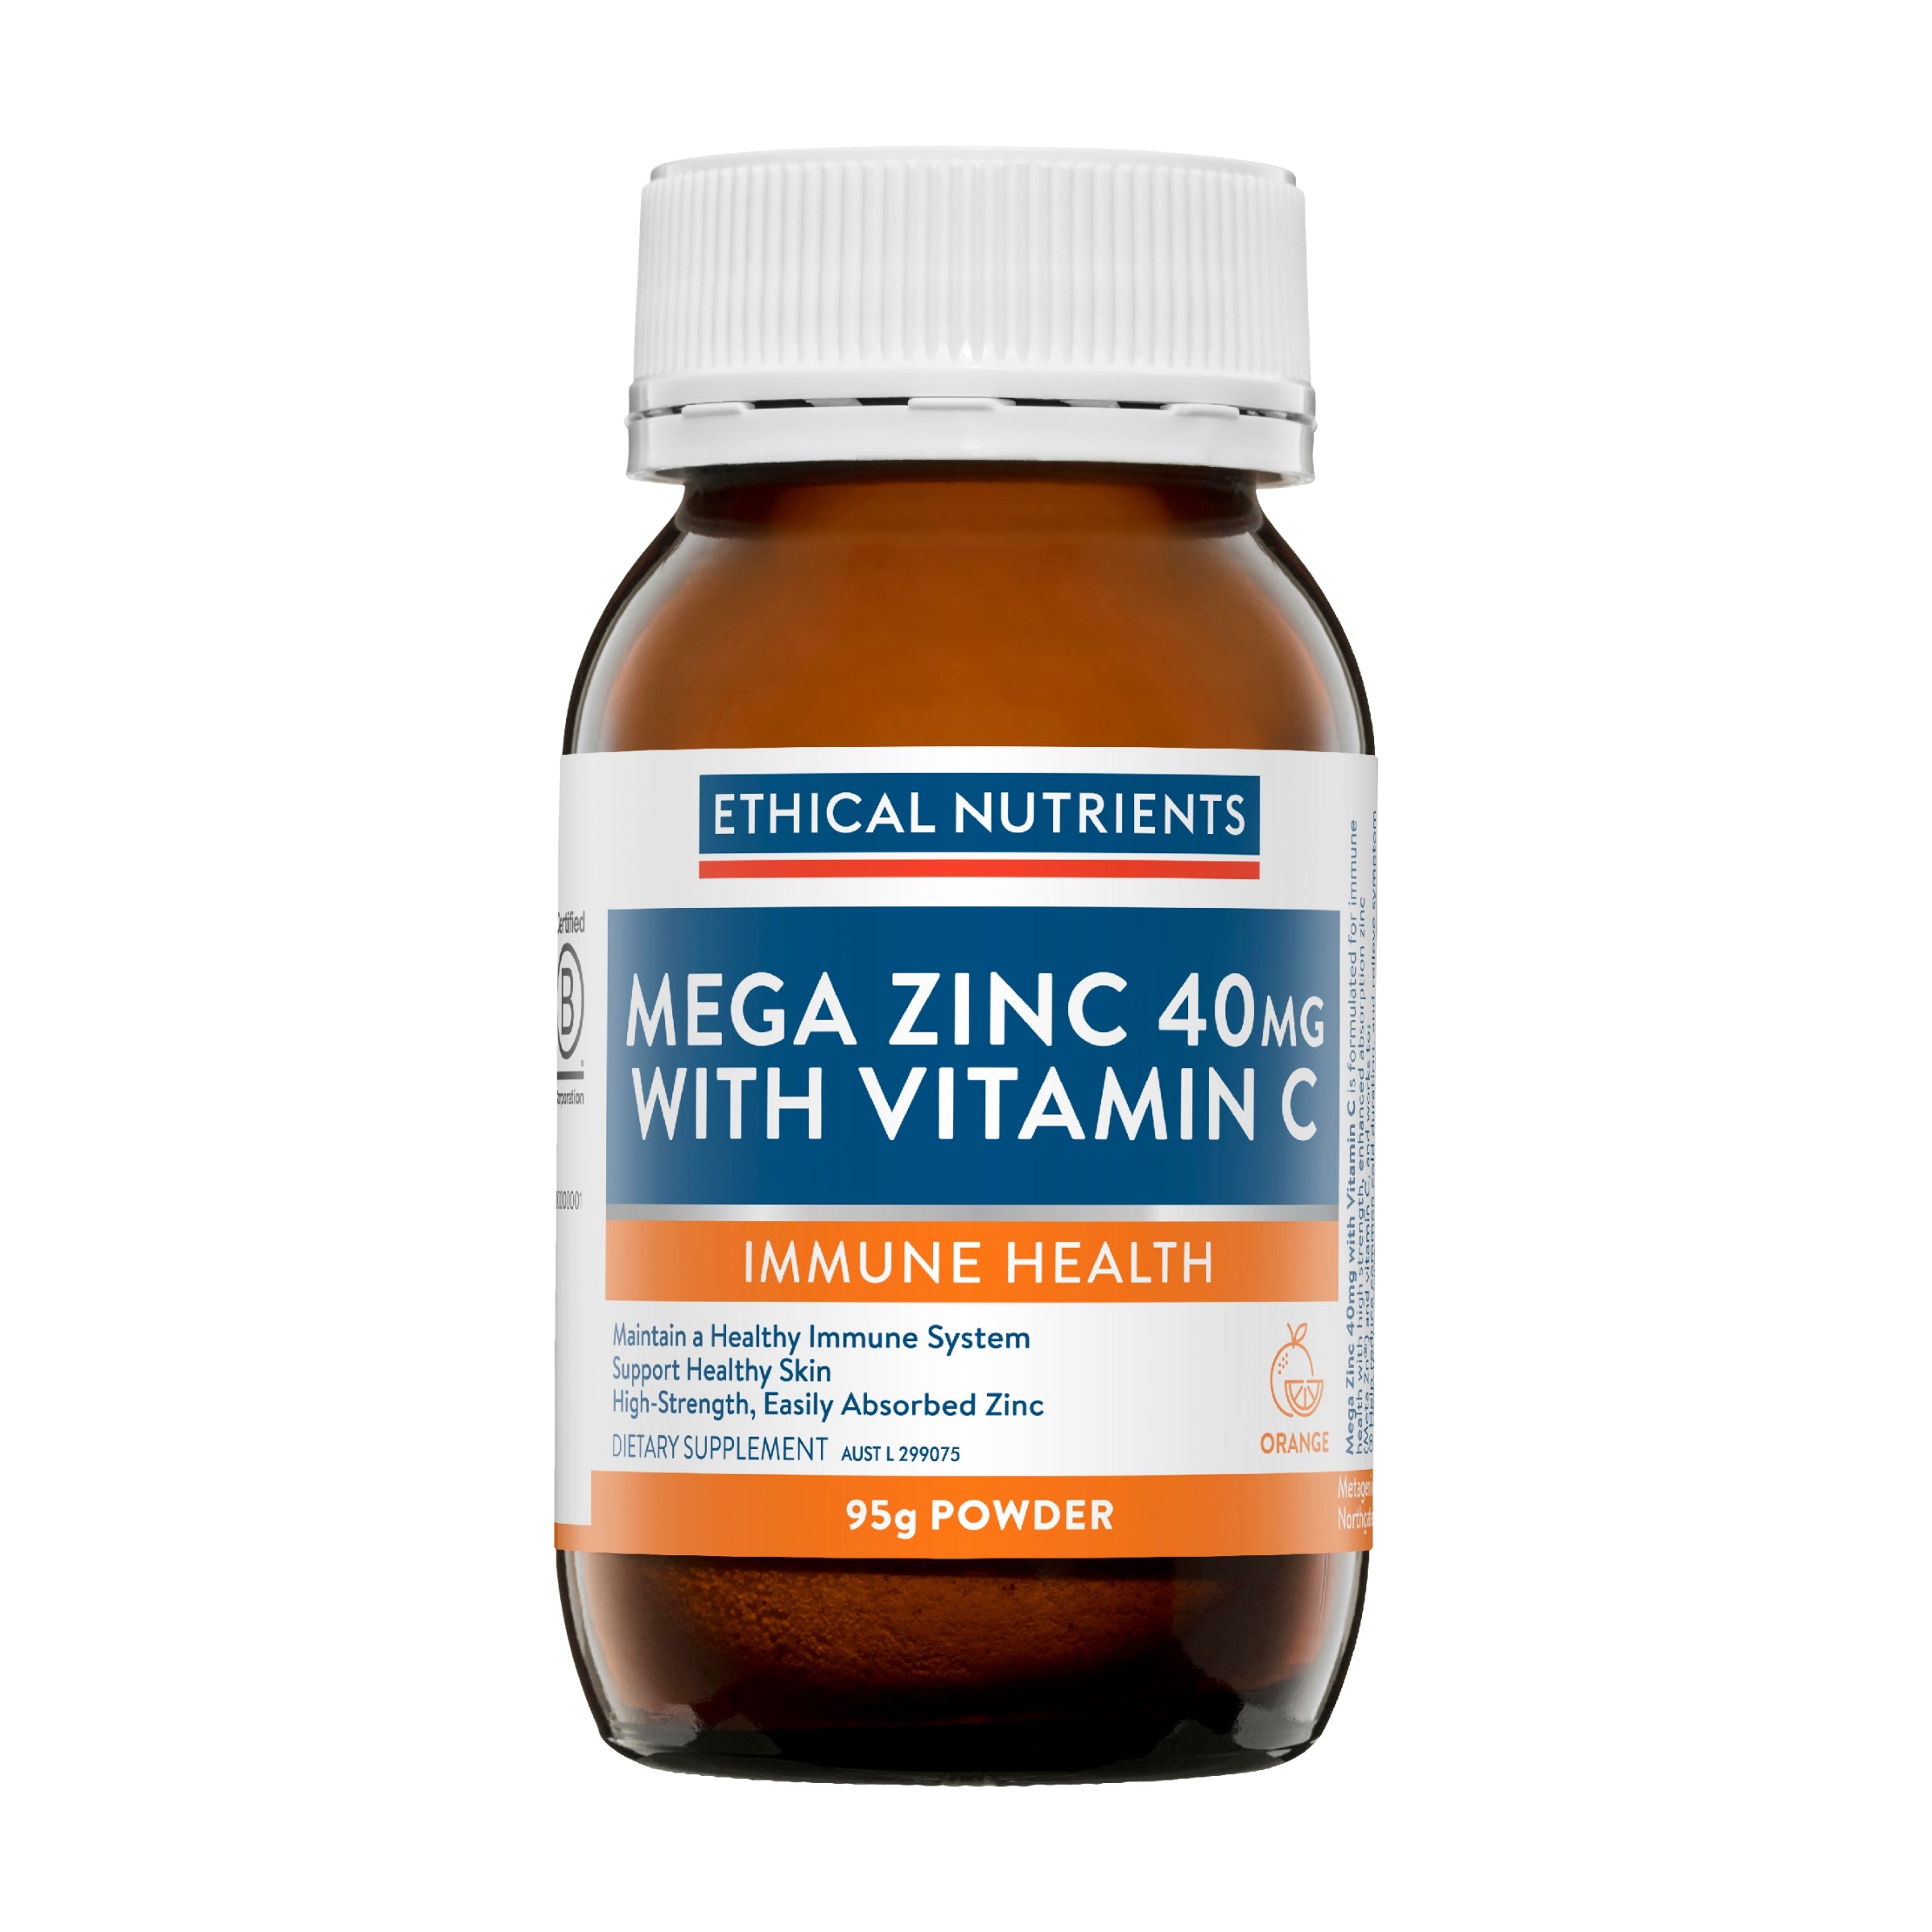 Ethical Nutrients Mega Zinc 40mg with Vitamin C Powder Orange 95g #size & flavour_orange 95g